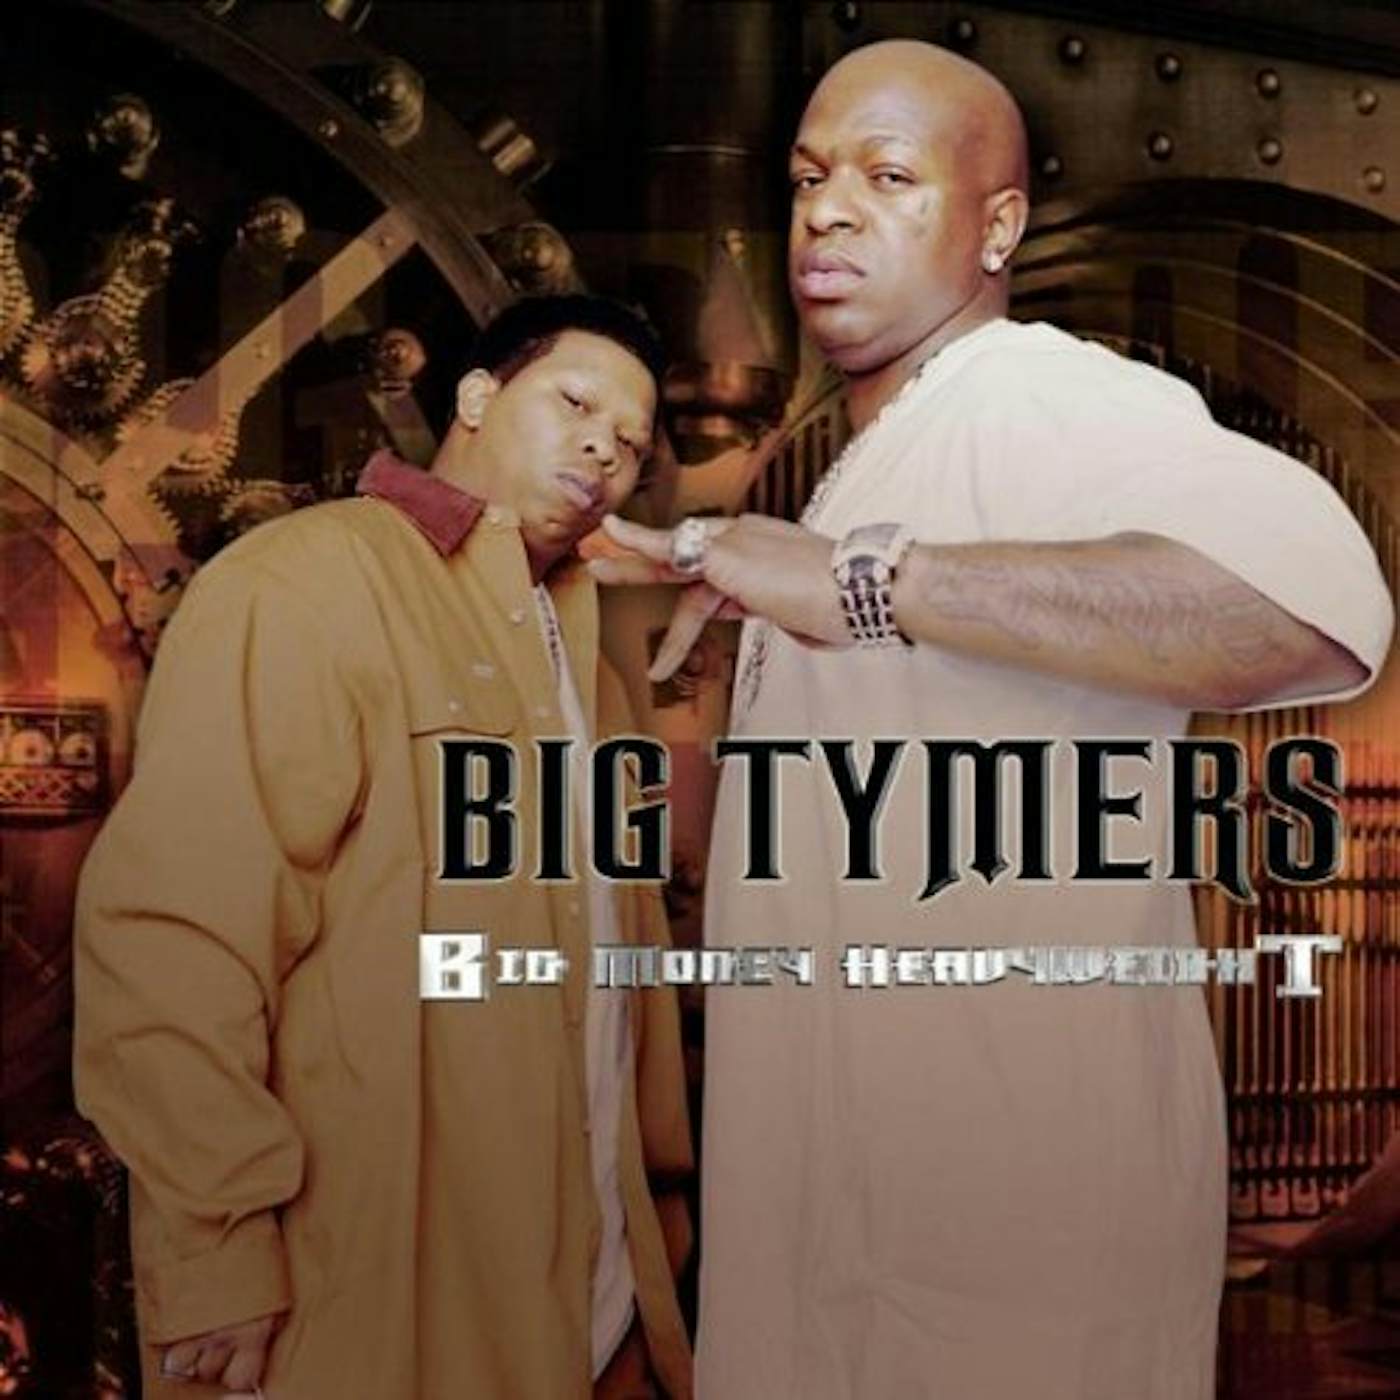 Big Tymers BIG MONEY HEAVYWIGHT CD